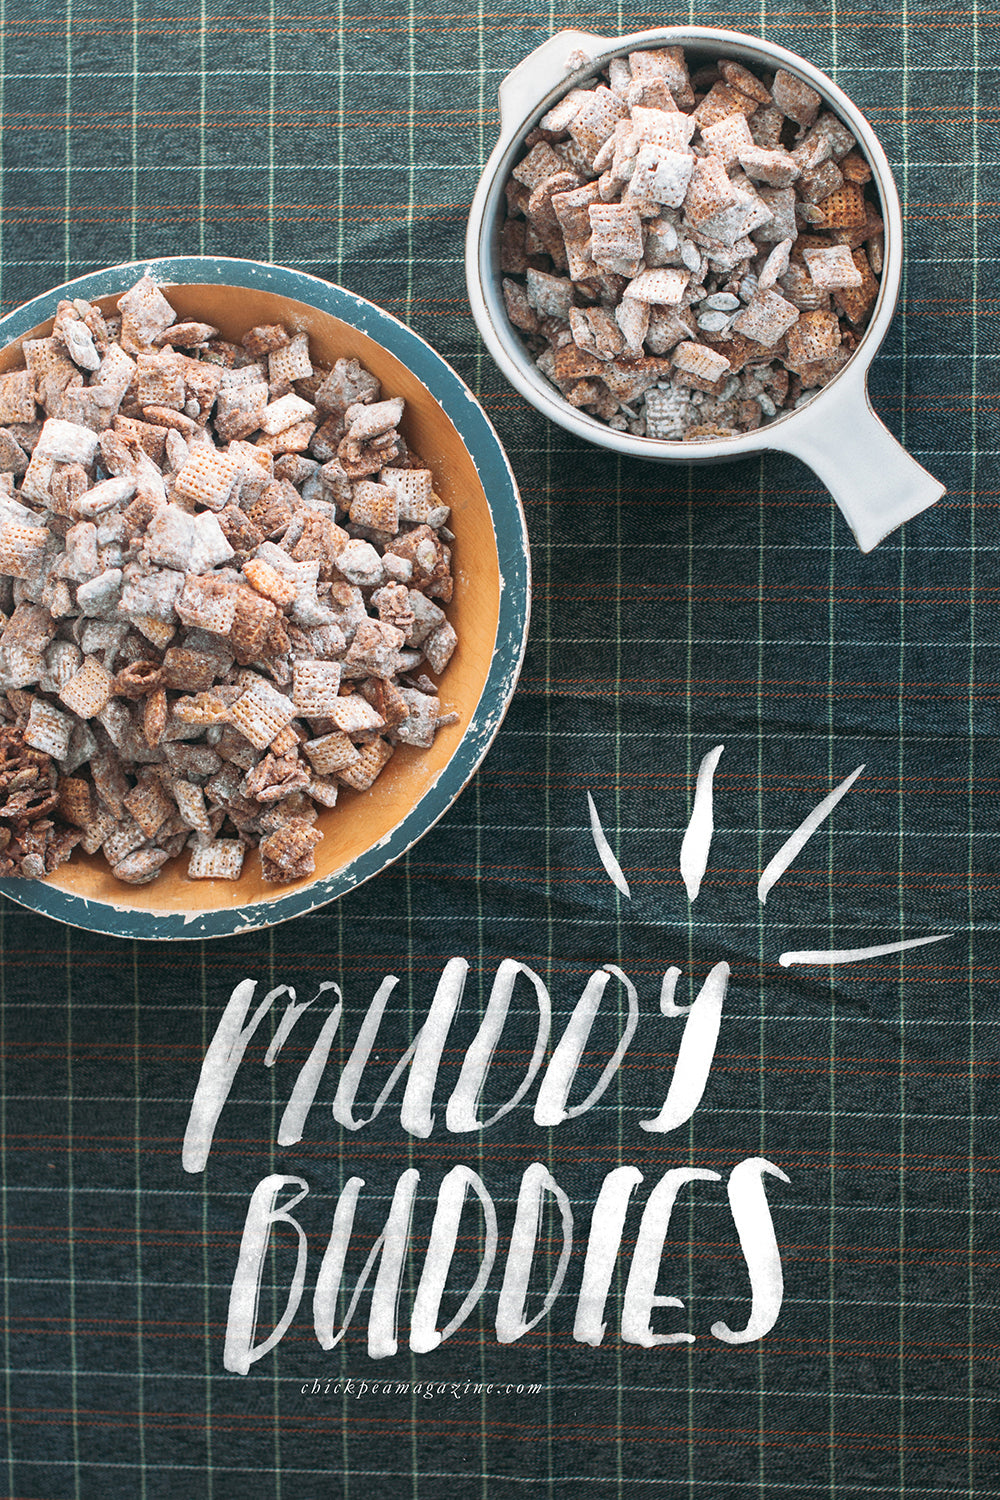 vegan muddy buddies (puppy chow)